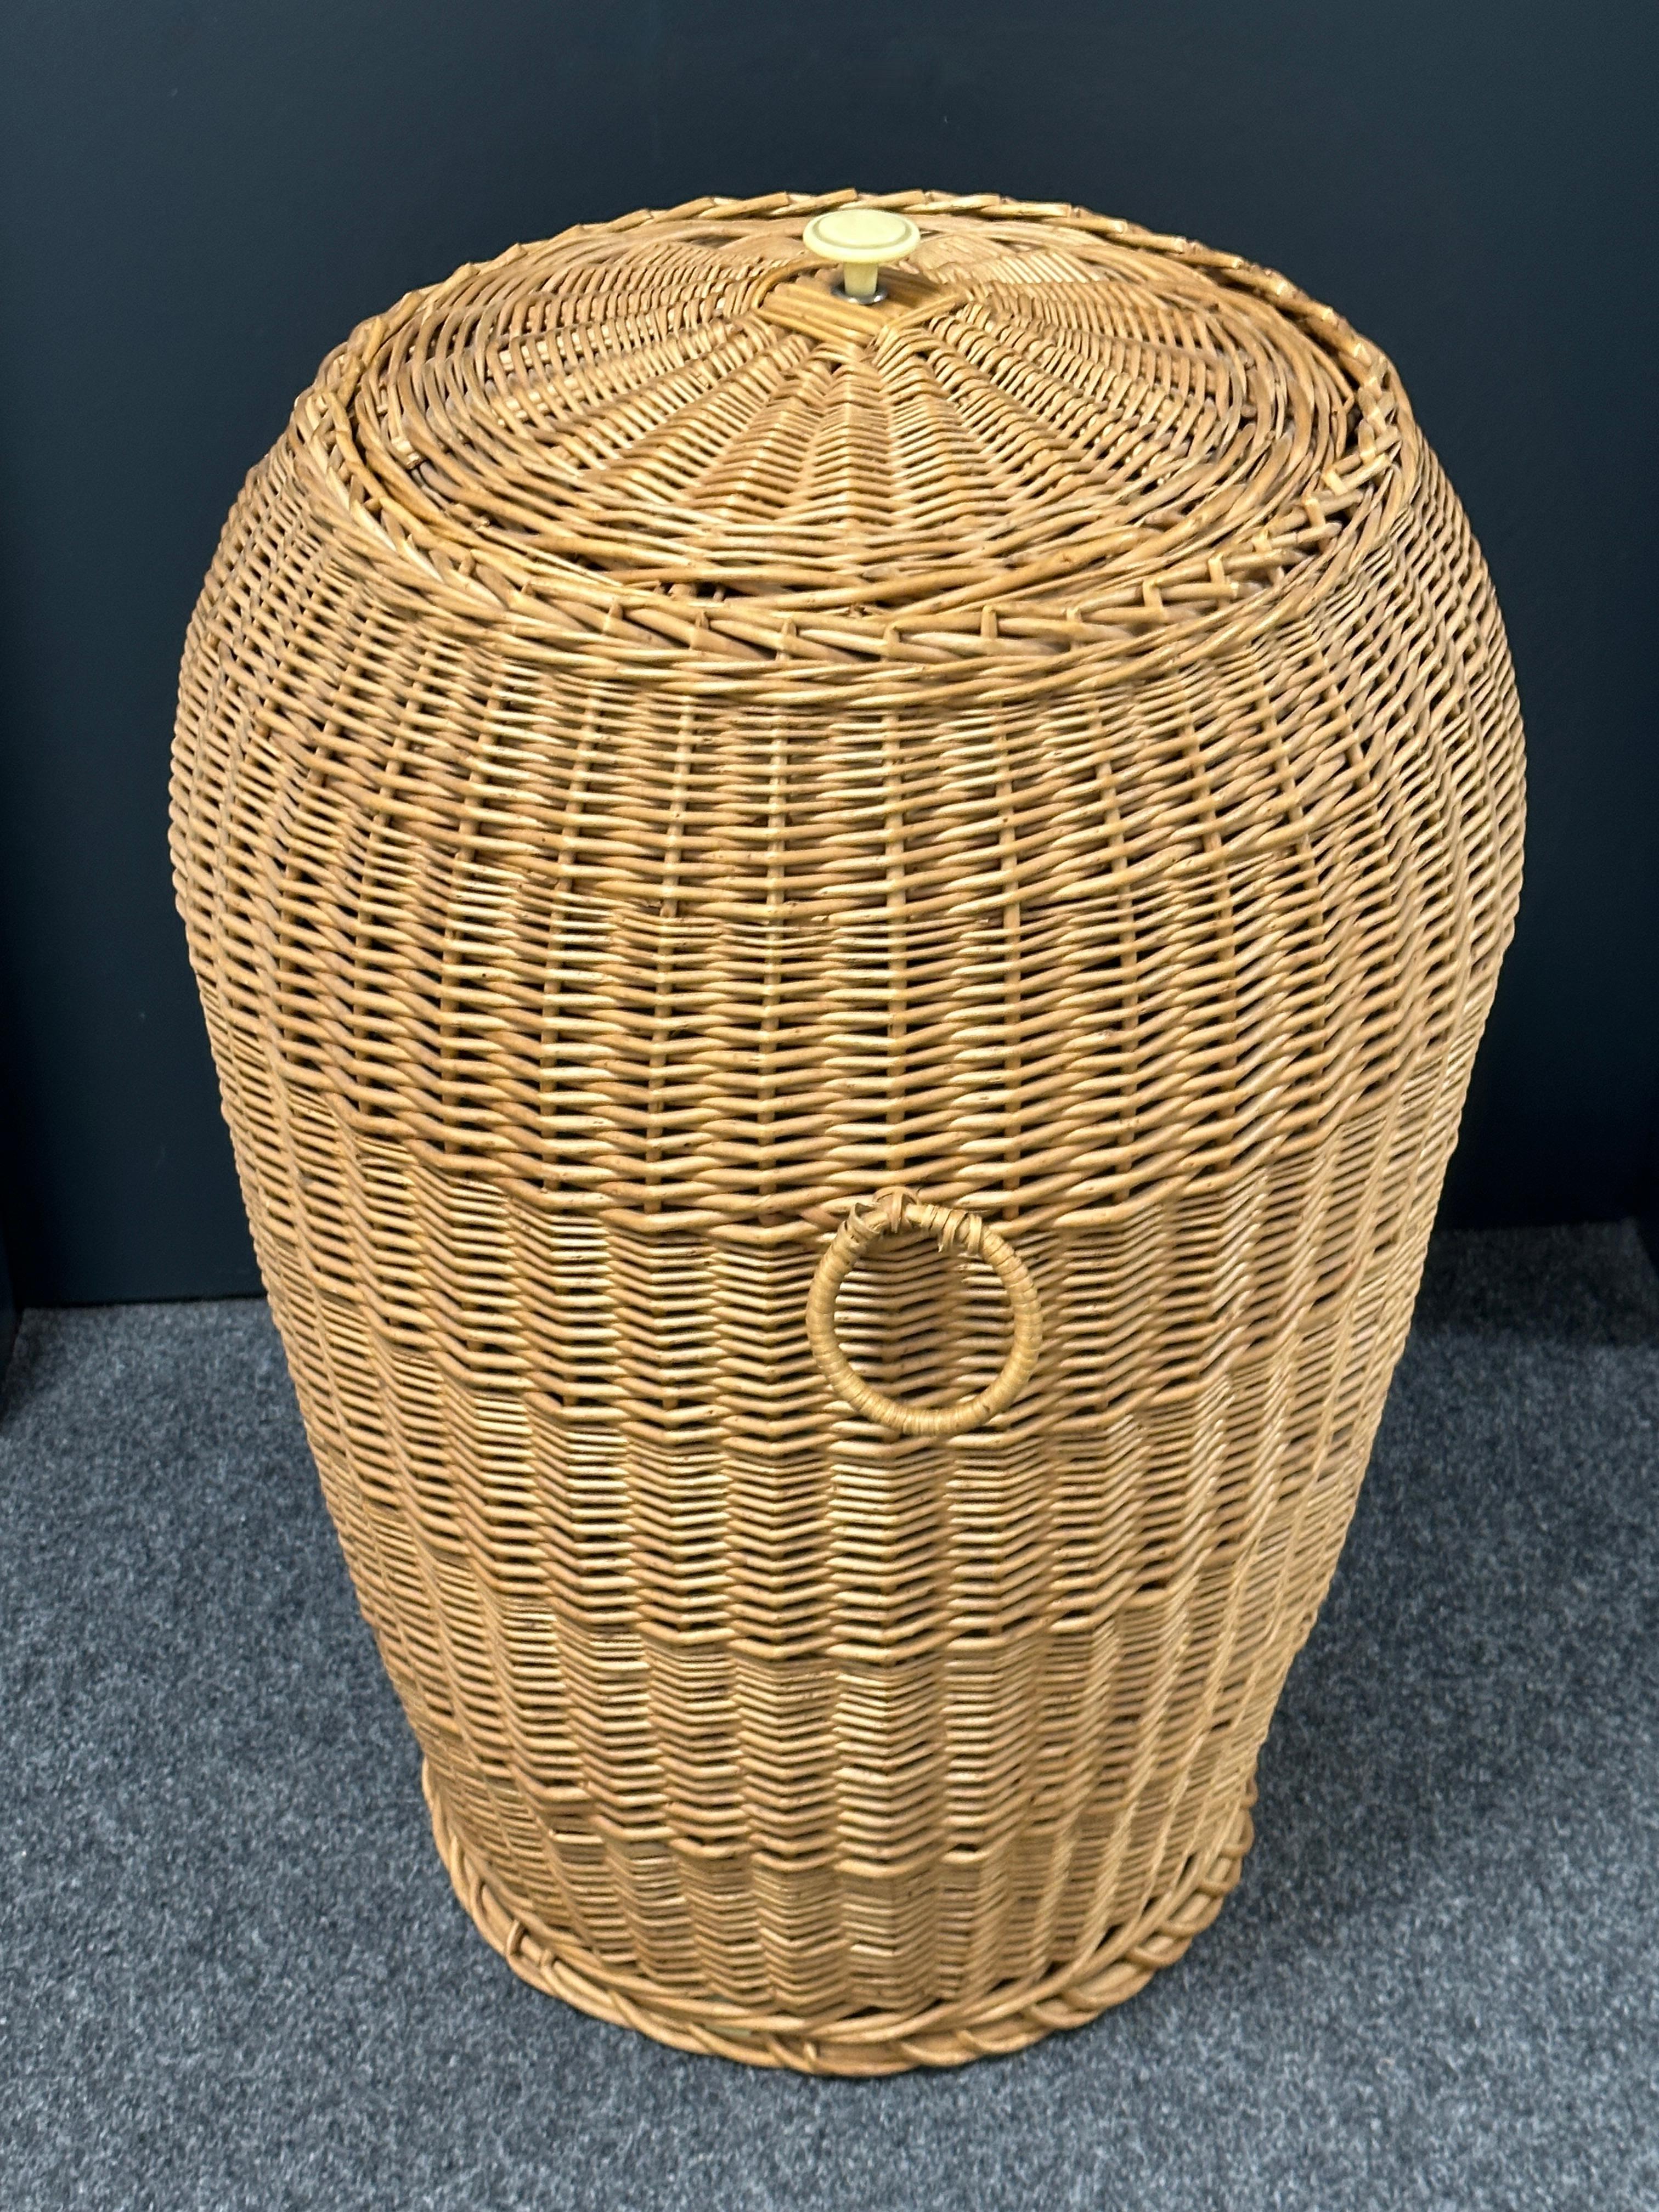 Monumental Vintage Midcentury Wicker Laundry Basket Hamper, 1970s, German For Sale 6